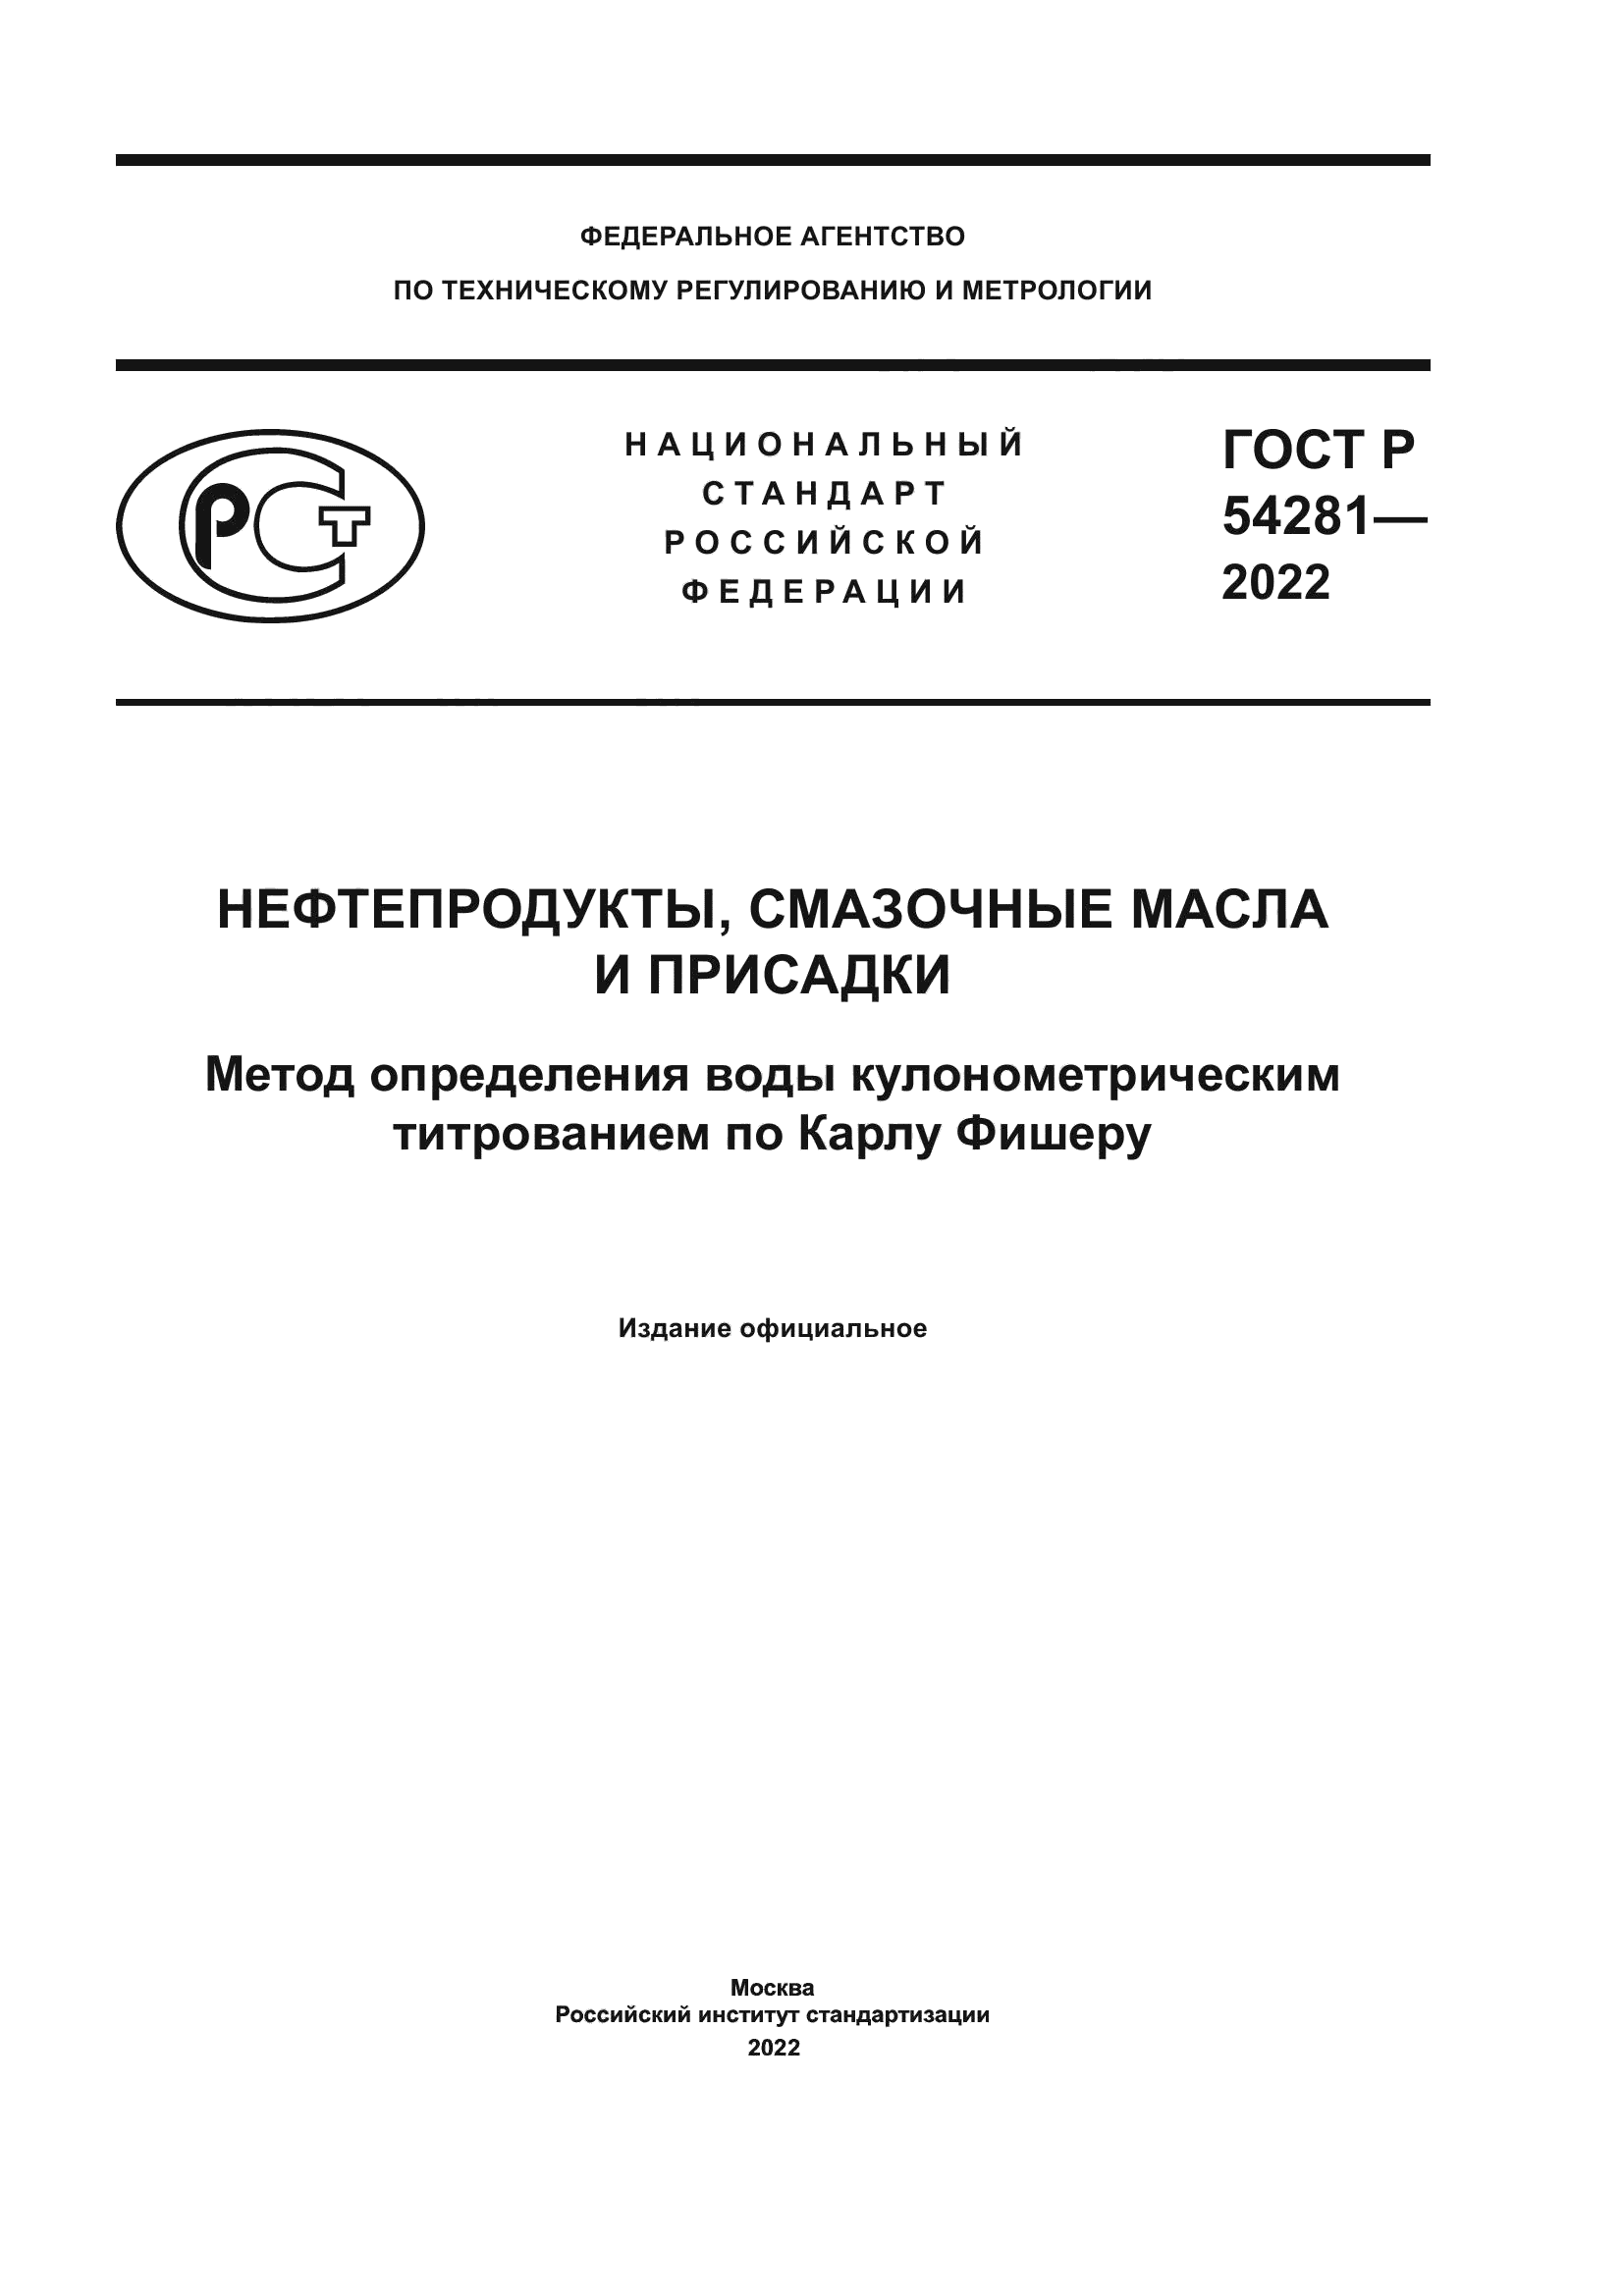 ГОСТ Р 54281-2022